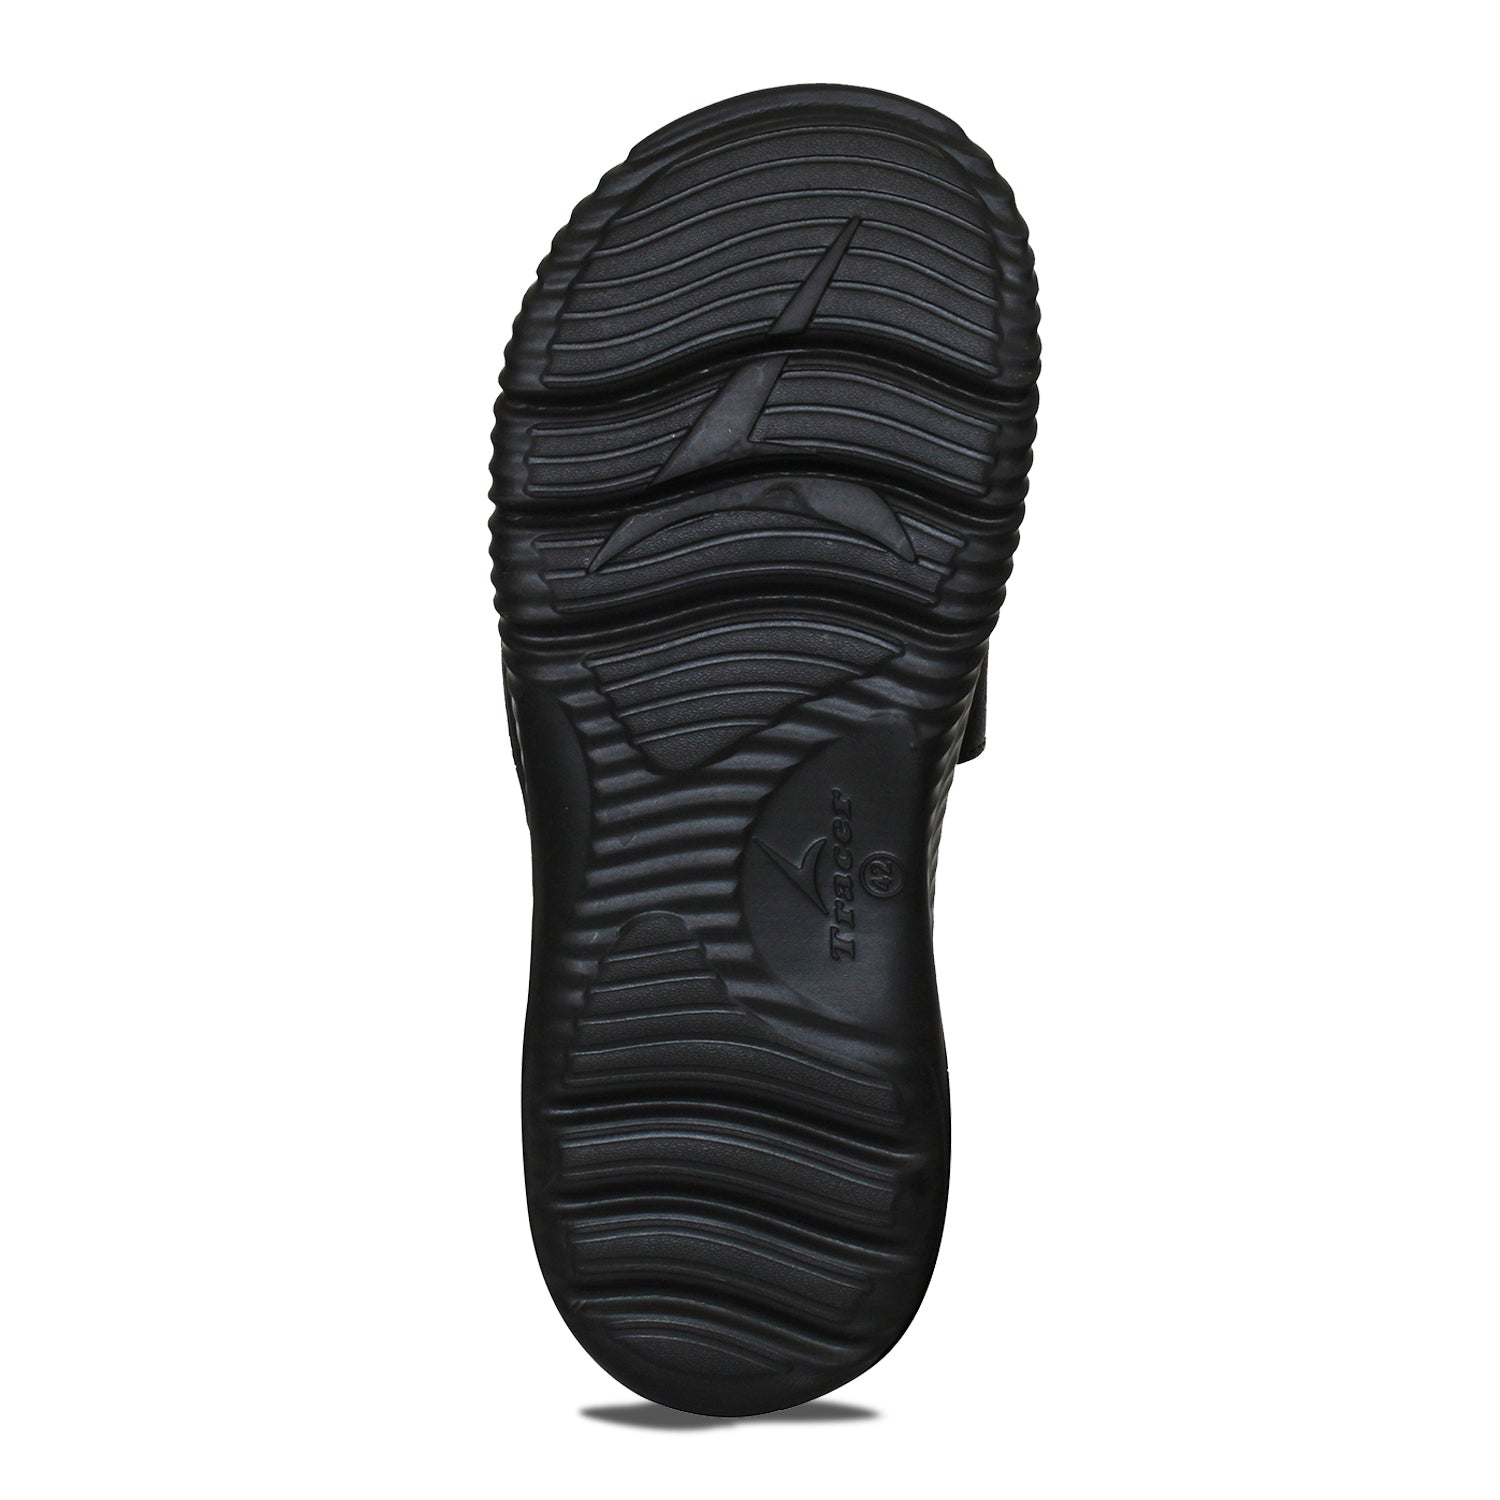 Nike slipper Black Slide Flip flop - Buy Nike slipper Black Slide Flip flop  Online at Best Prices in India on Snapdeal